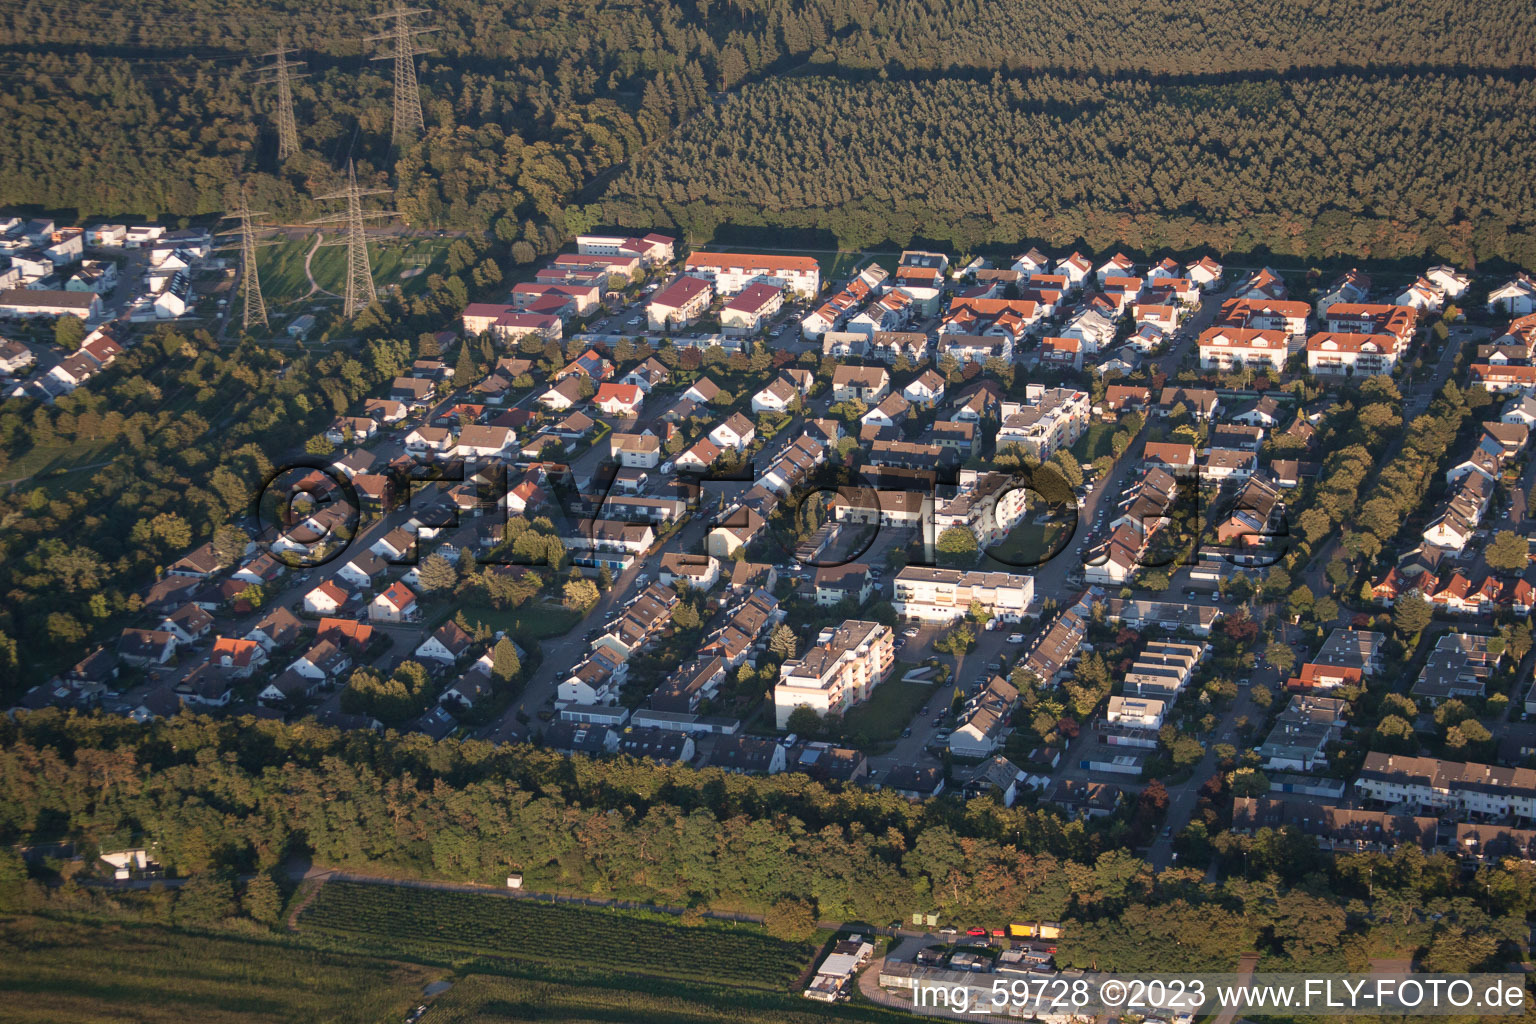 Quartier Eggenstein in Eggenstein-Leopoldshafen dans le département Bade-Wurtemberg, Allemagne vue d'en haut